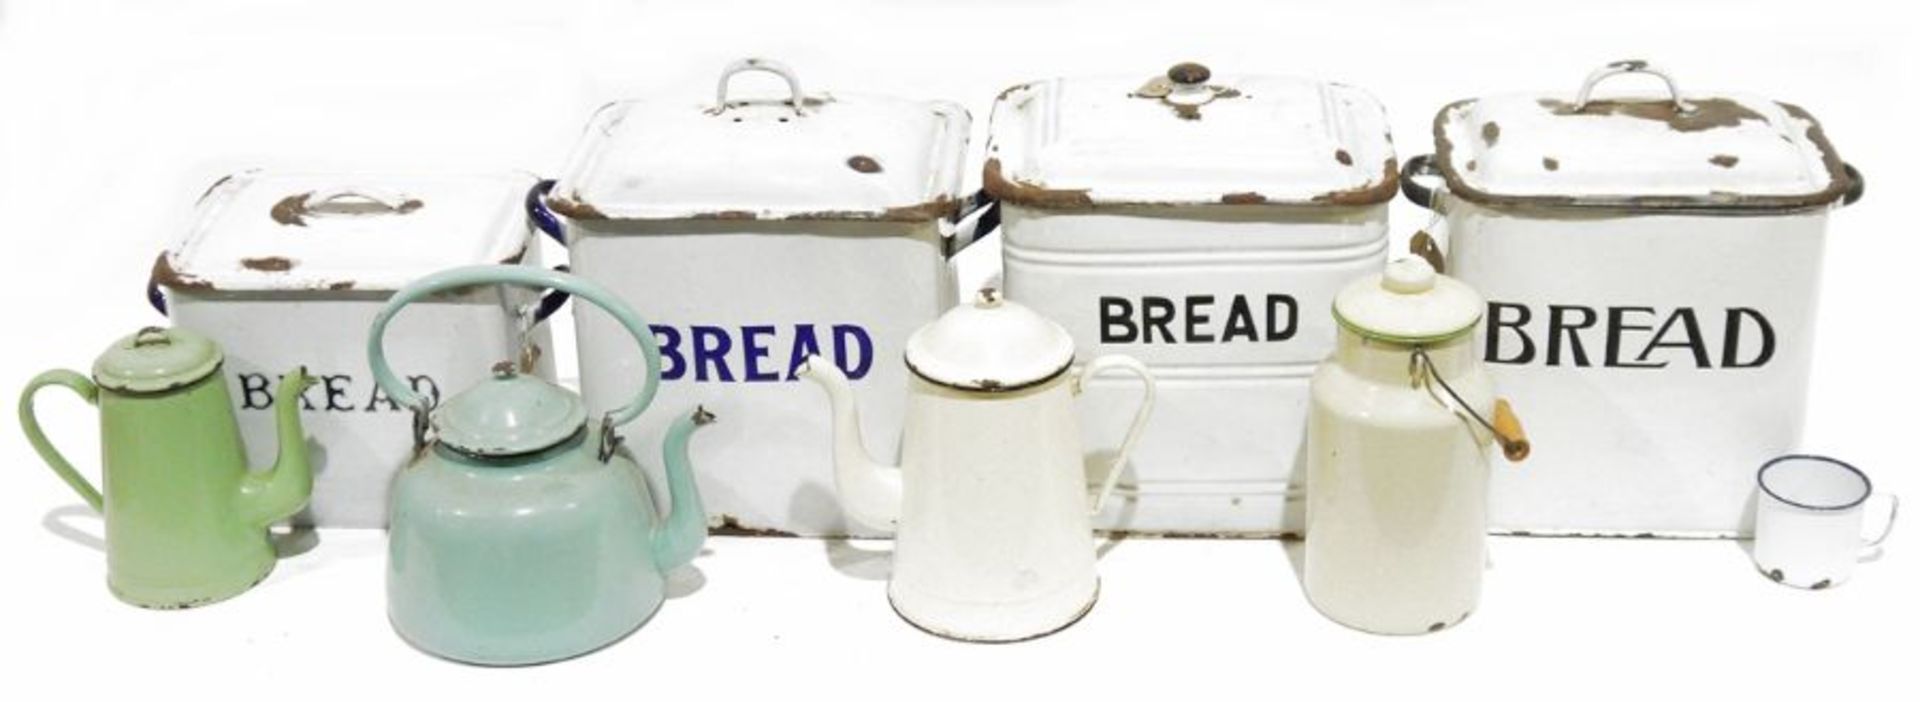 Four enamelled metal bread bins, an enamelled metal milk pail/churn and a teapot (6) Condition